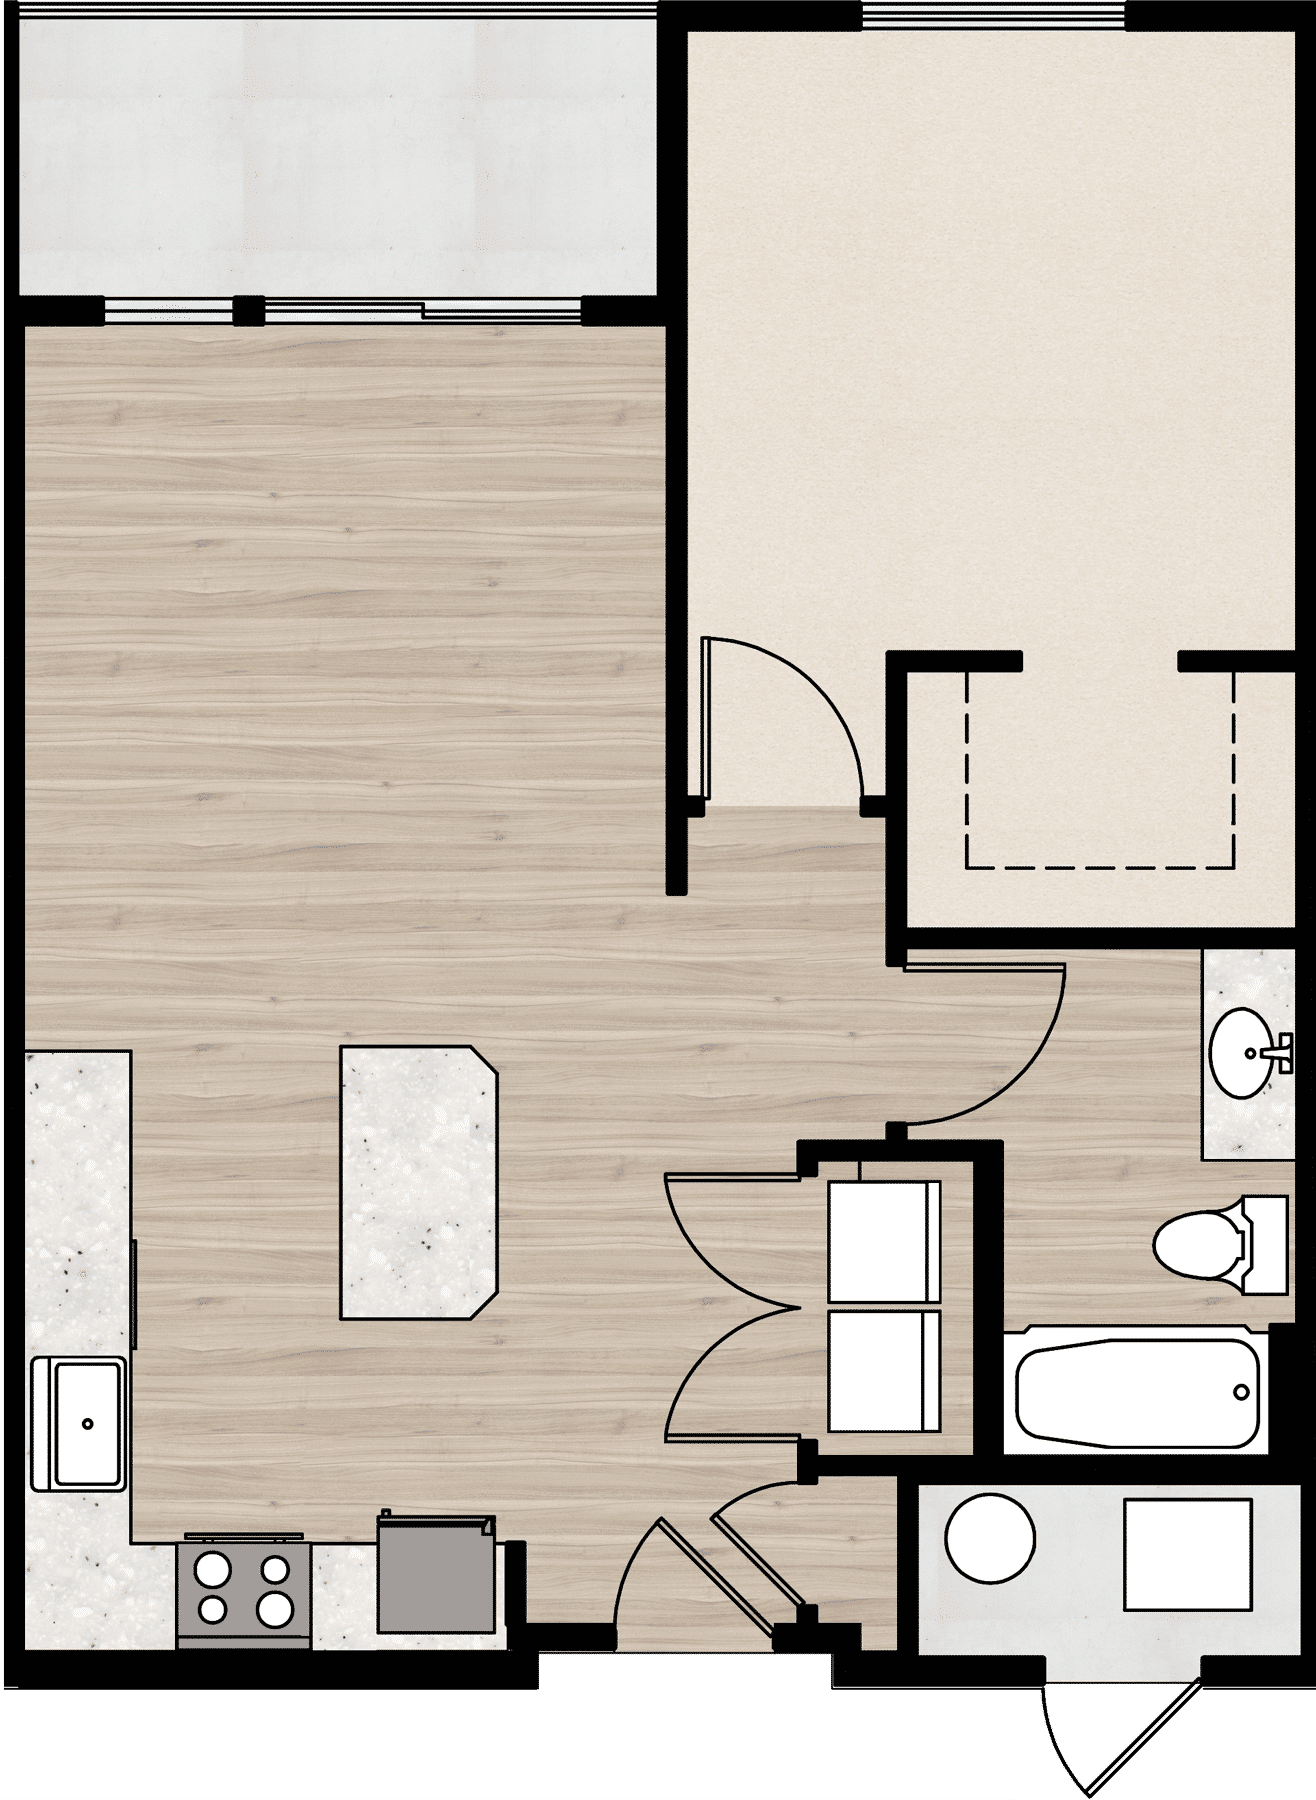 Mill Creek apartment floor plan